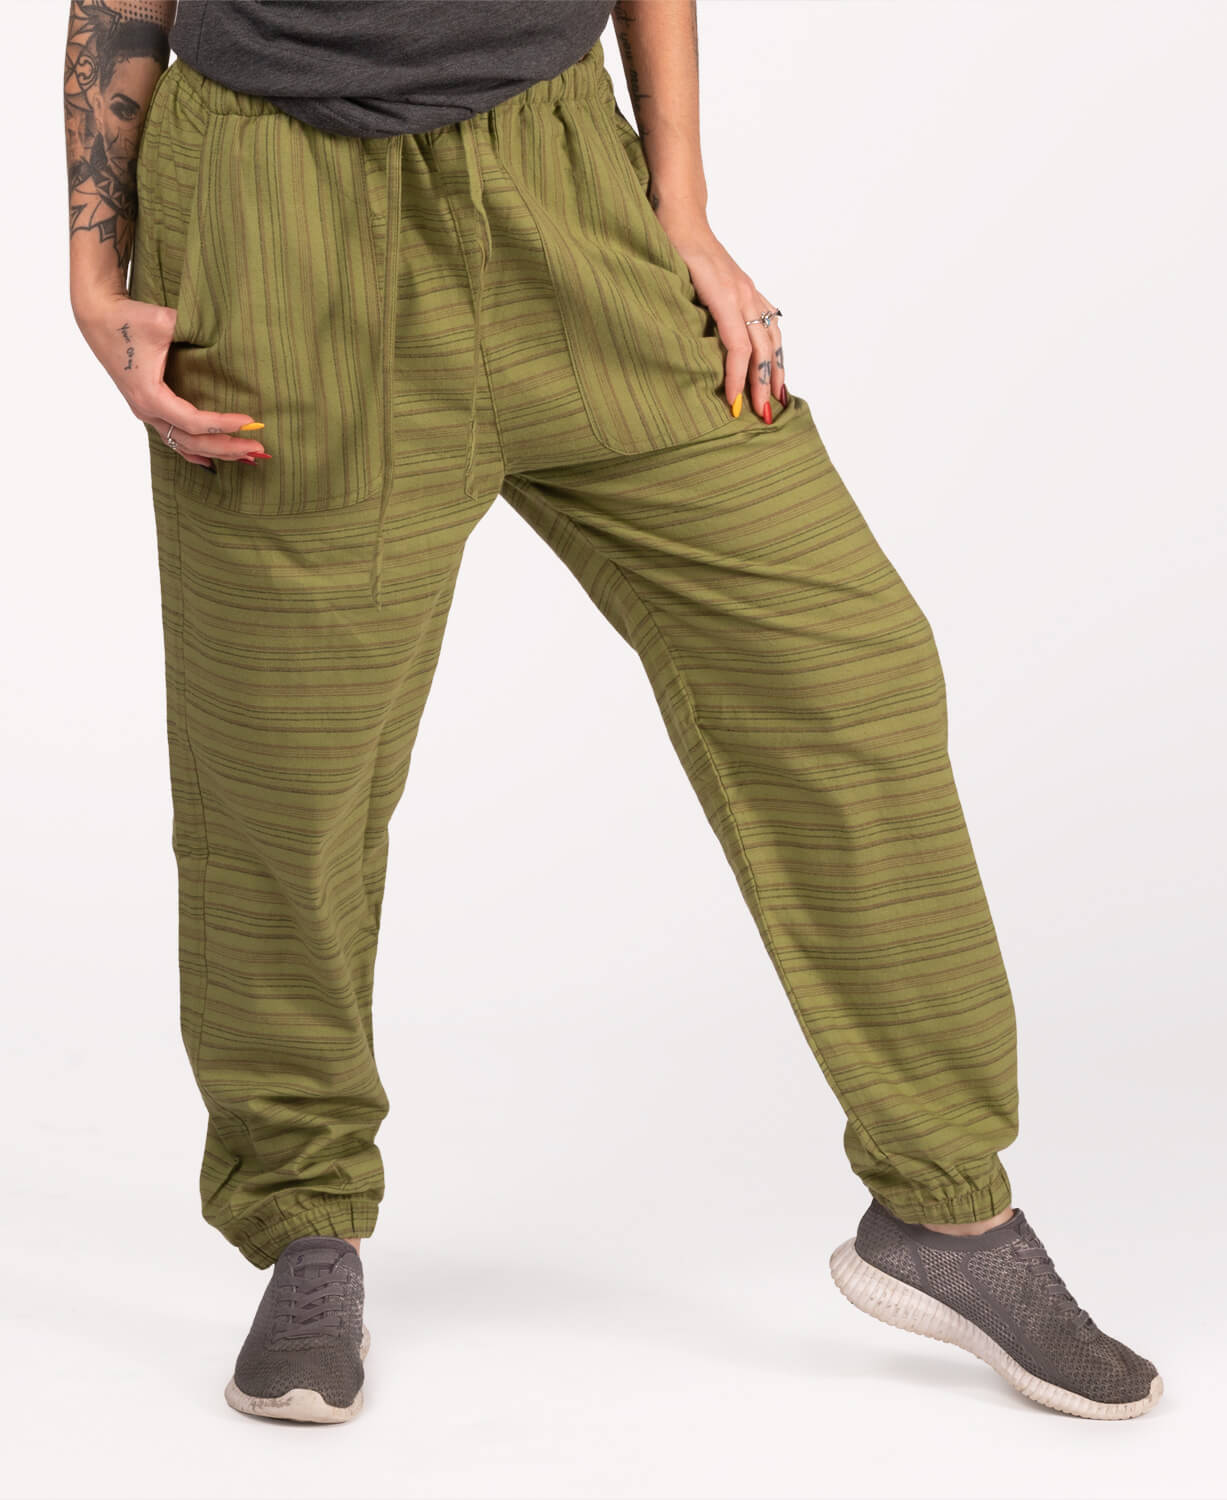 Dressoir Lol erwt Green Hippie Harem Pants | Striped Harems | Soul Flower